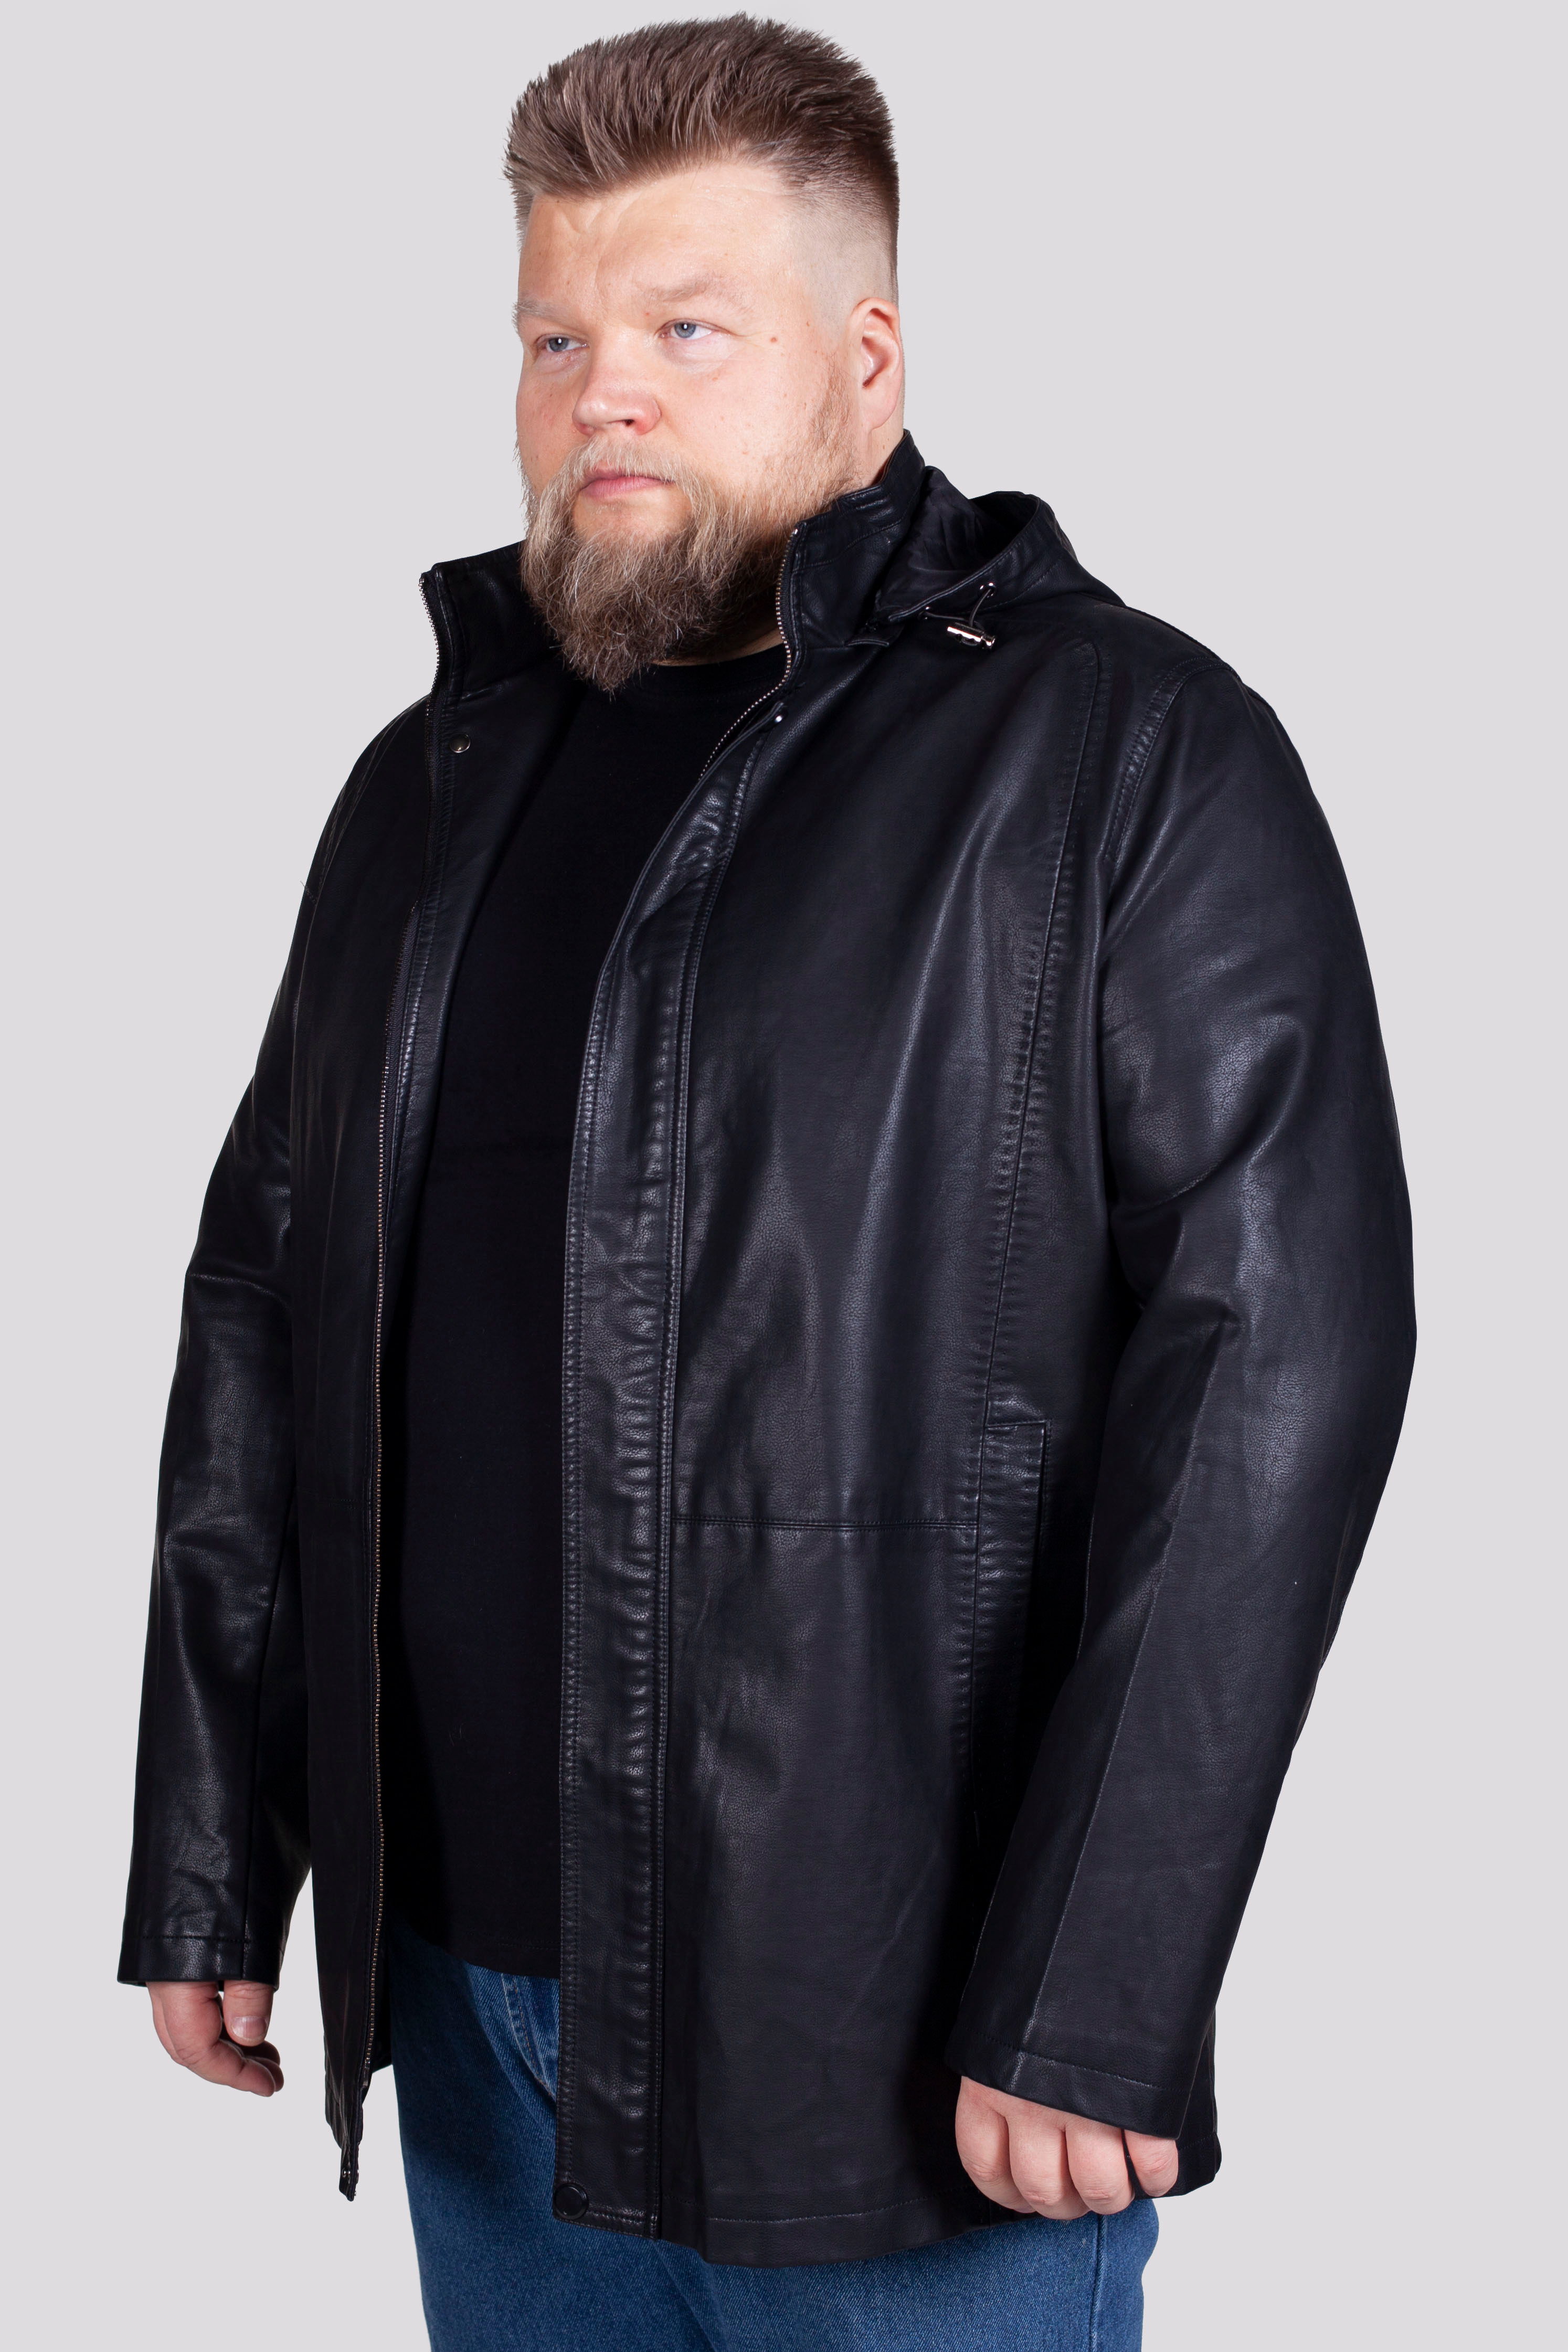 Кожаная куртка мужская ORO 1613 черная 54 RU